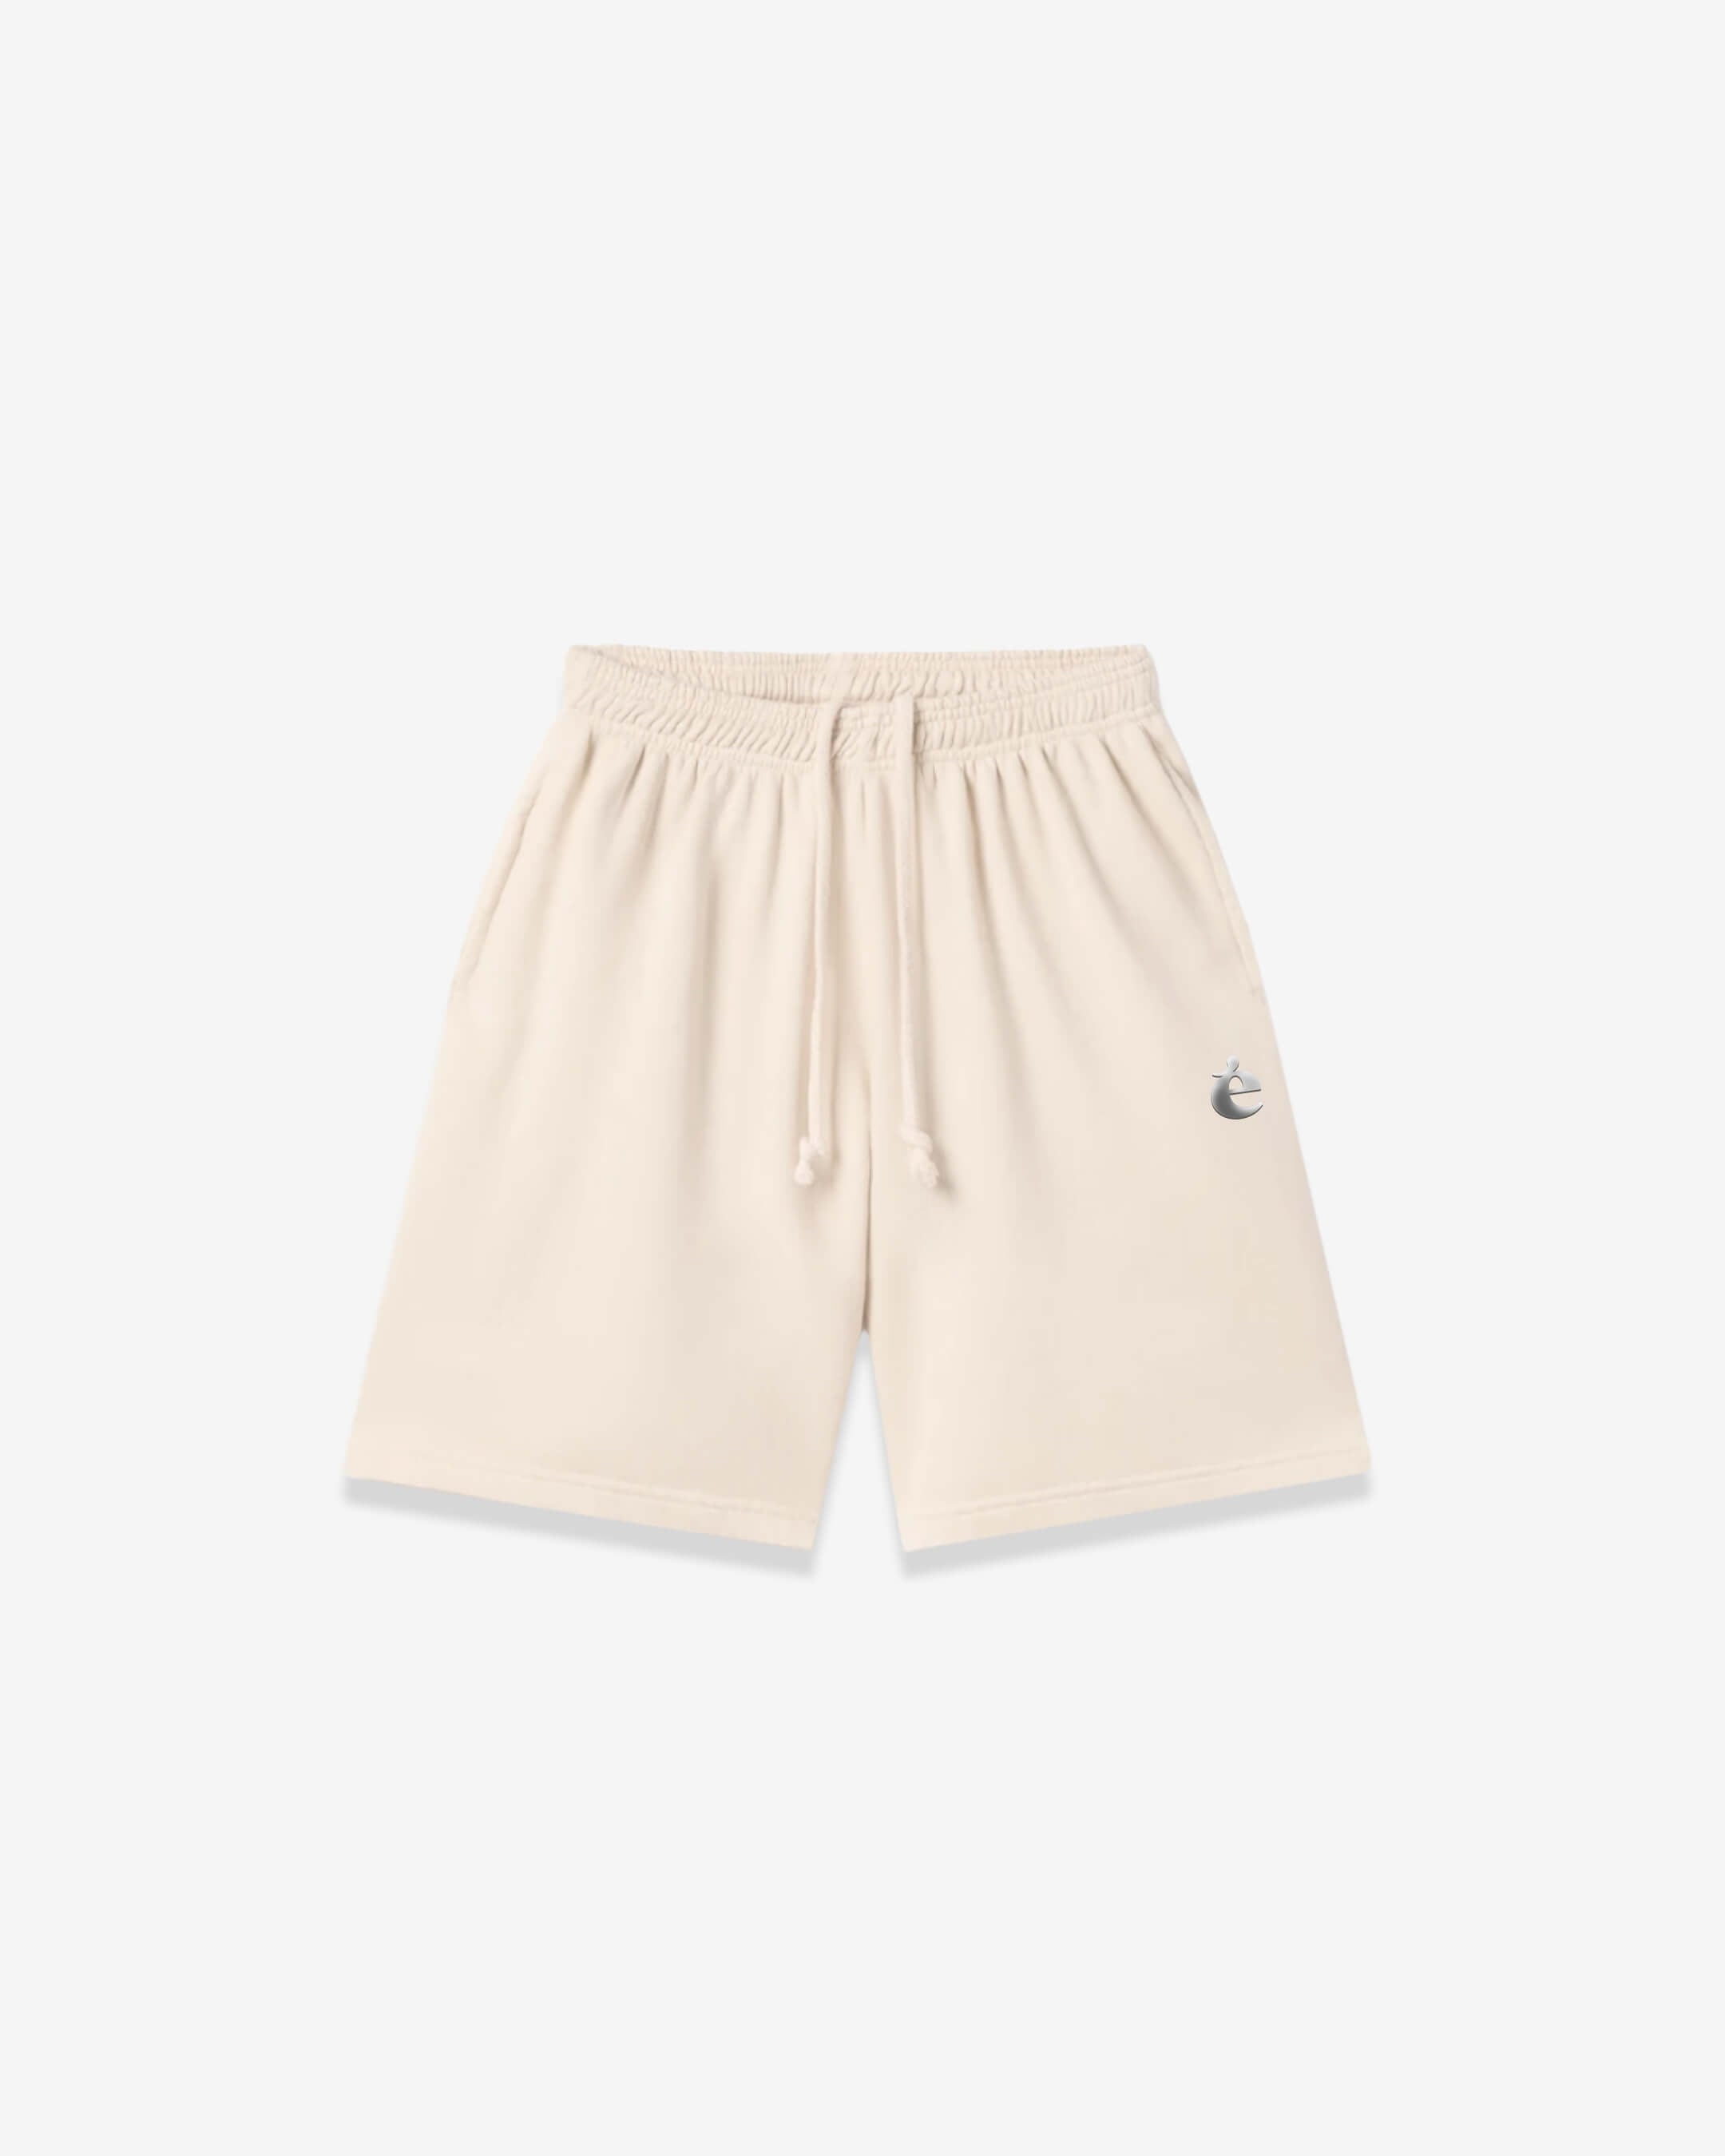 Basic Summer Shorts - Vanilla Cream